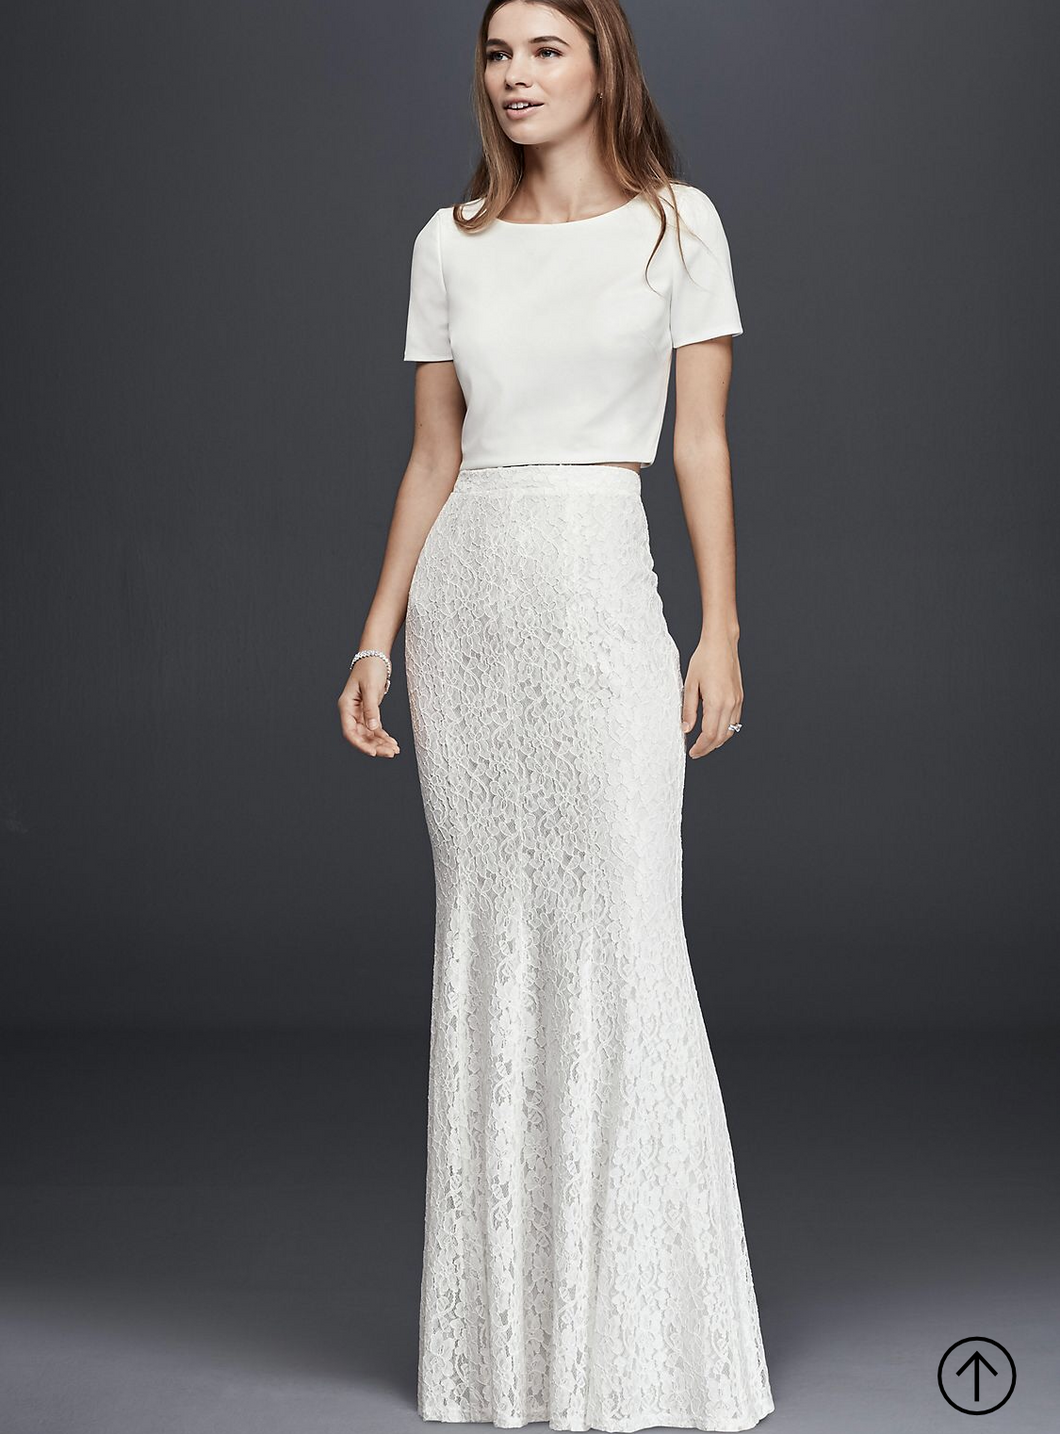 David's Bridal 'DB Studio' size 8 new wedding dress front view on model